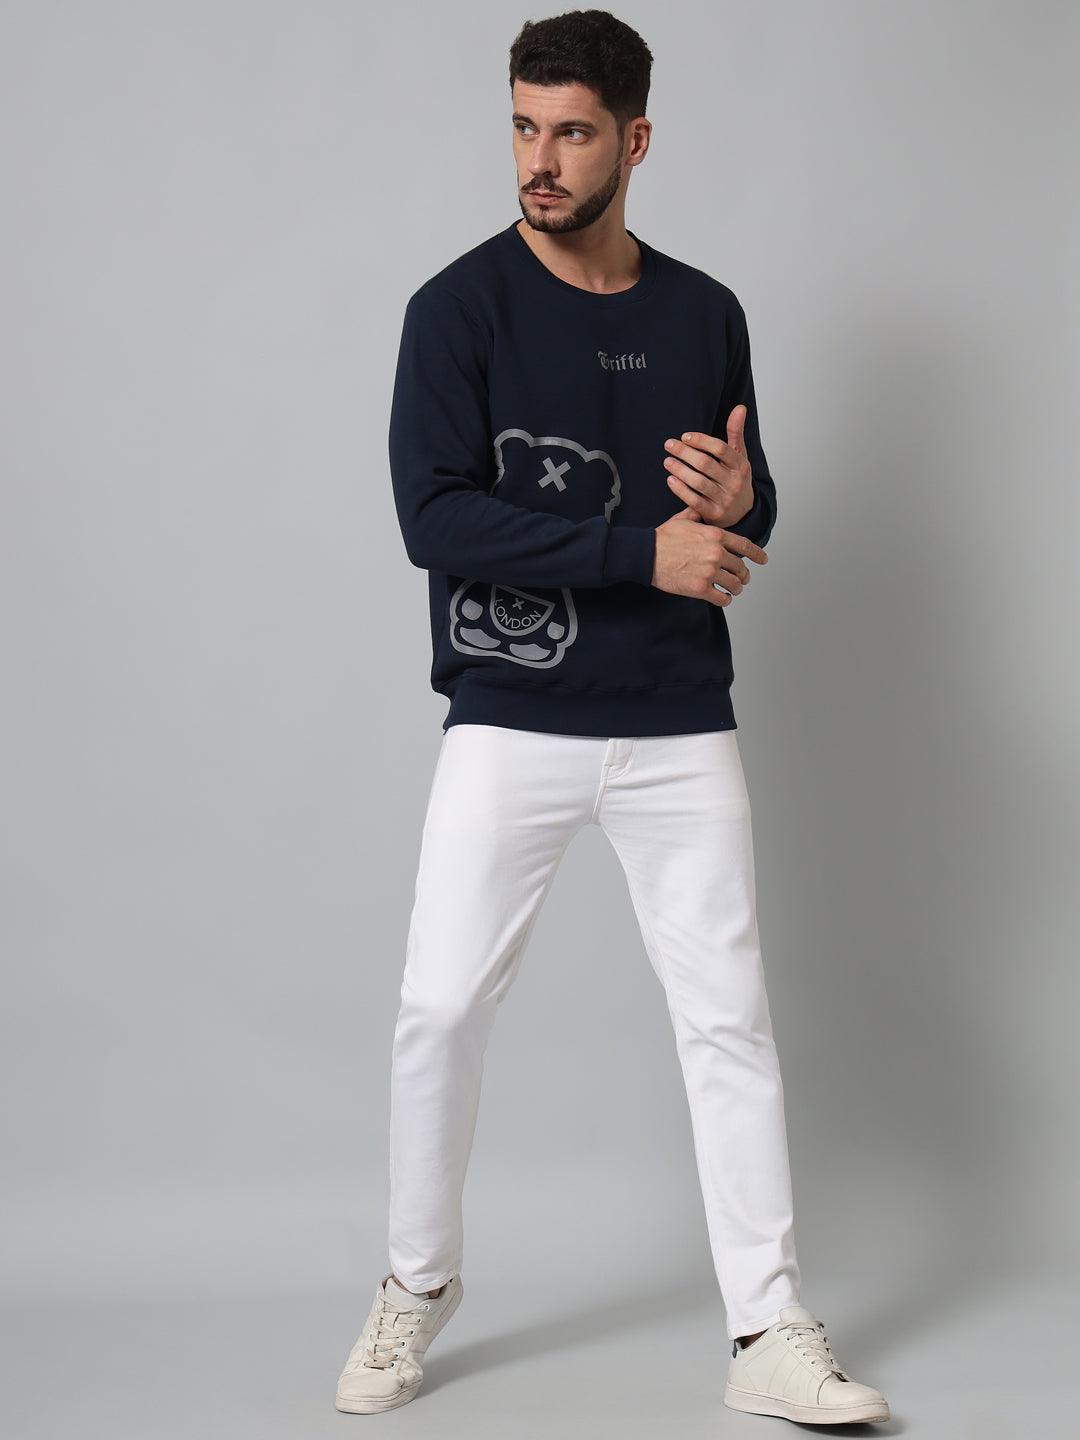 Griffel Men's Cotton Fleece Round Neck Navy Grey Sweatshirt with Full Sleeve and Teddy Logo Print - griffel